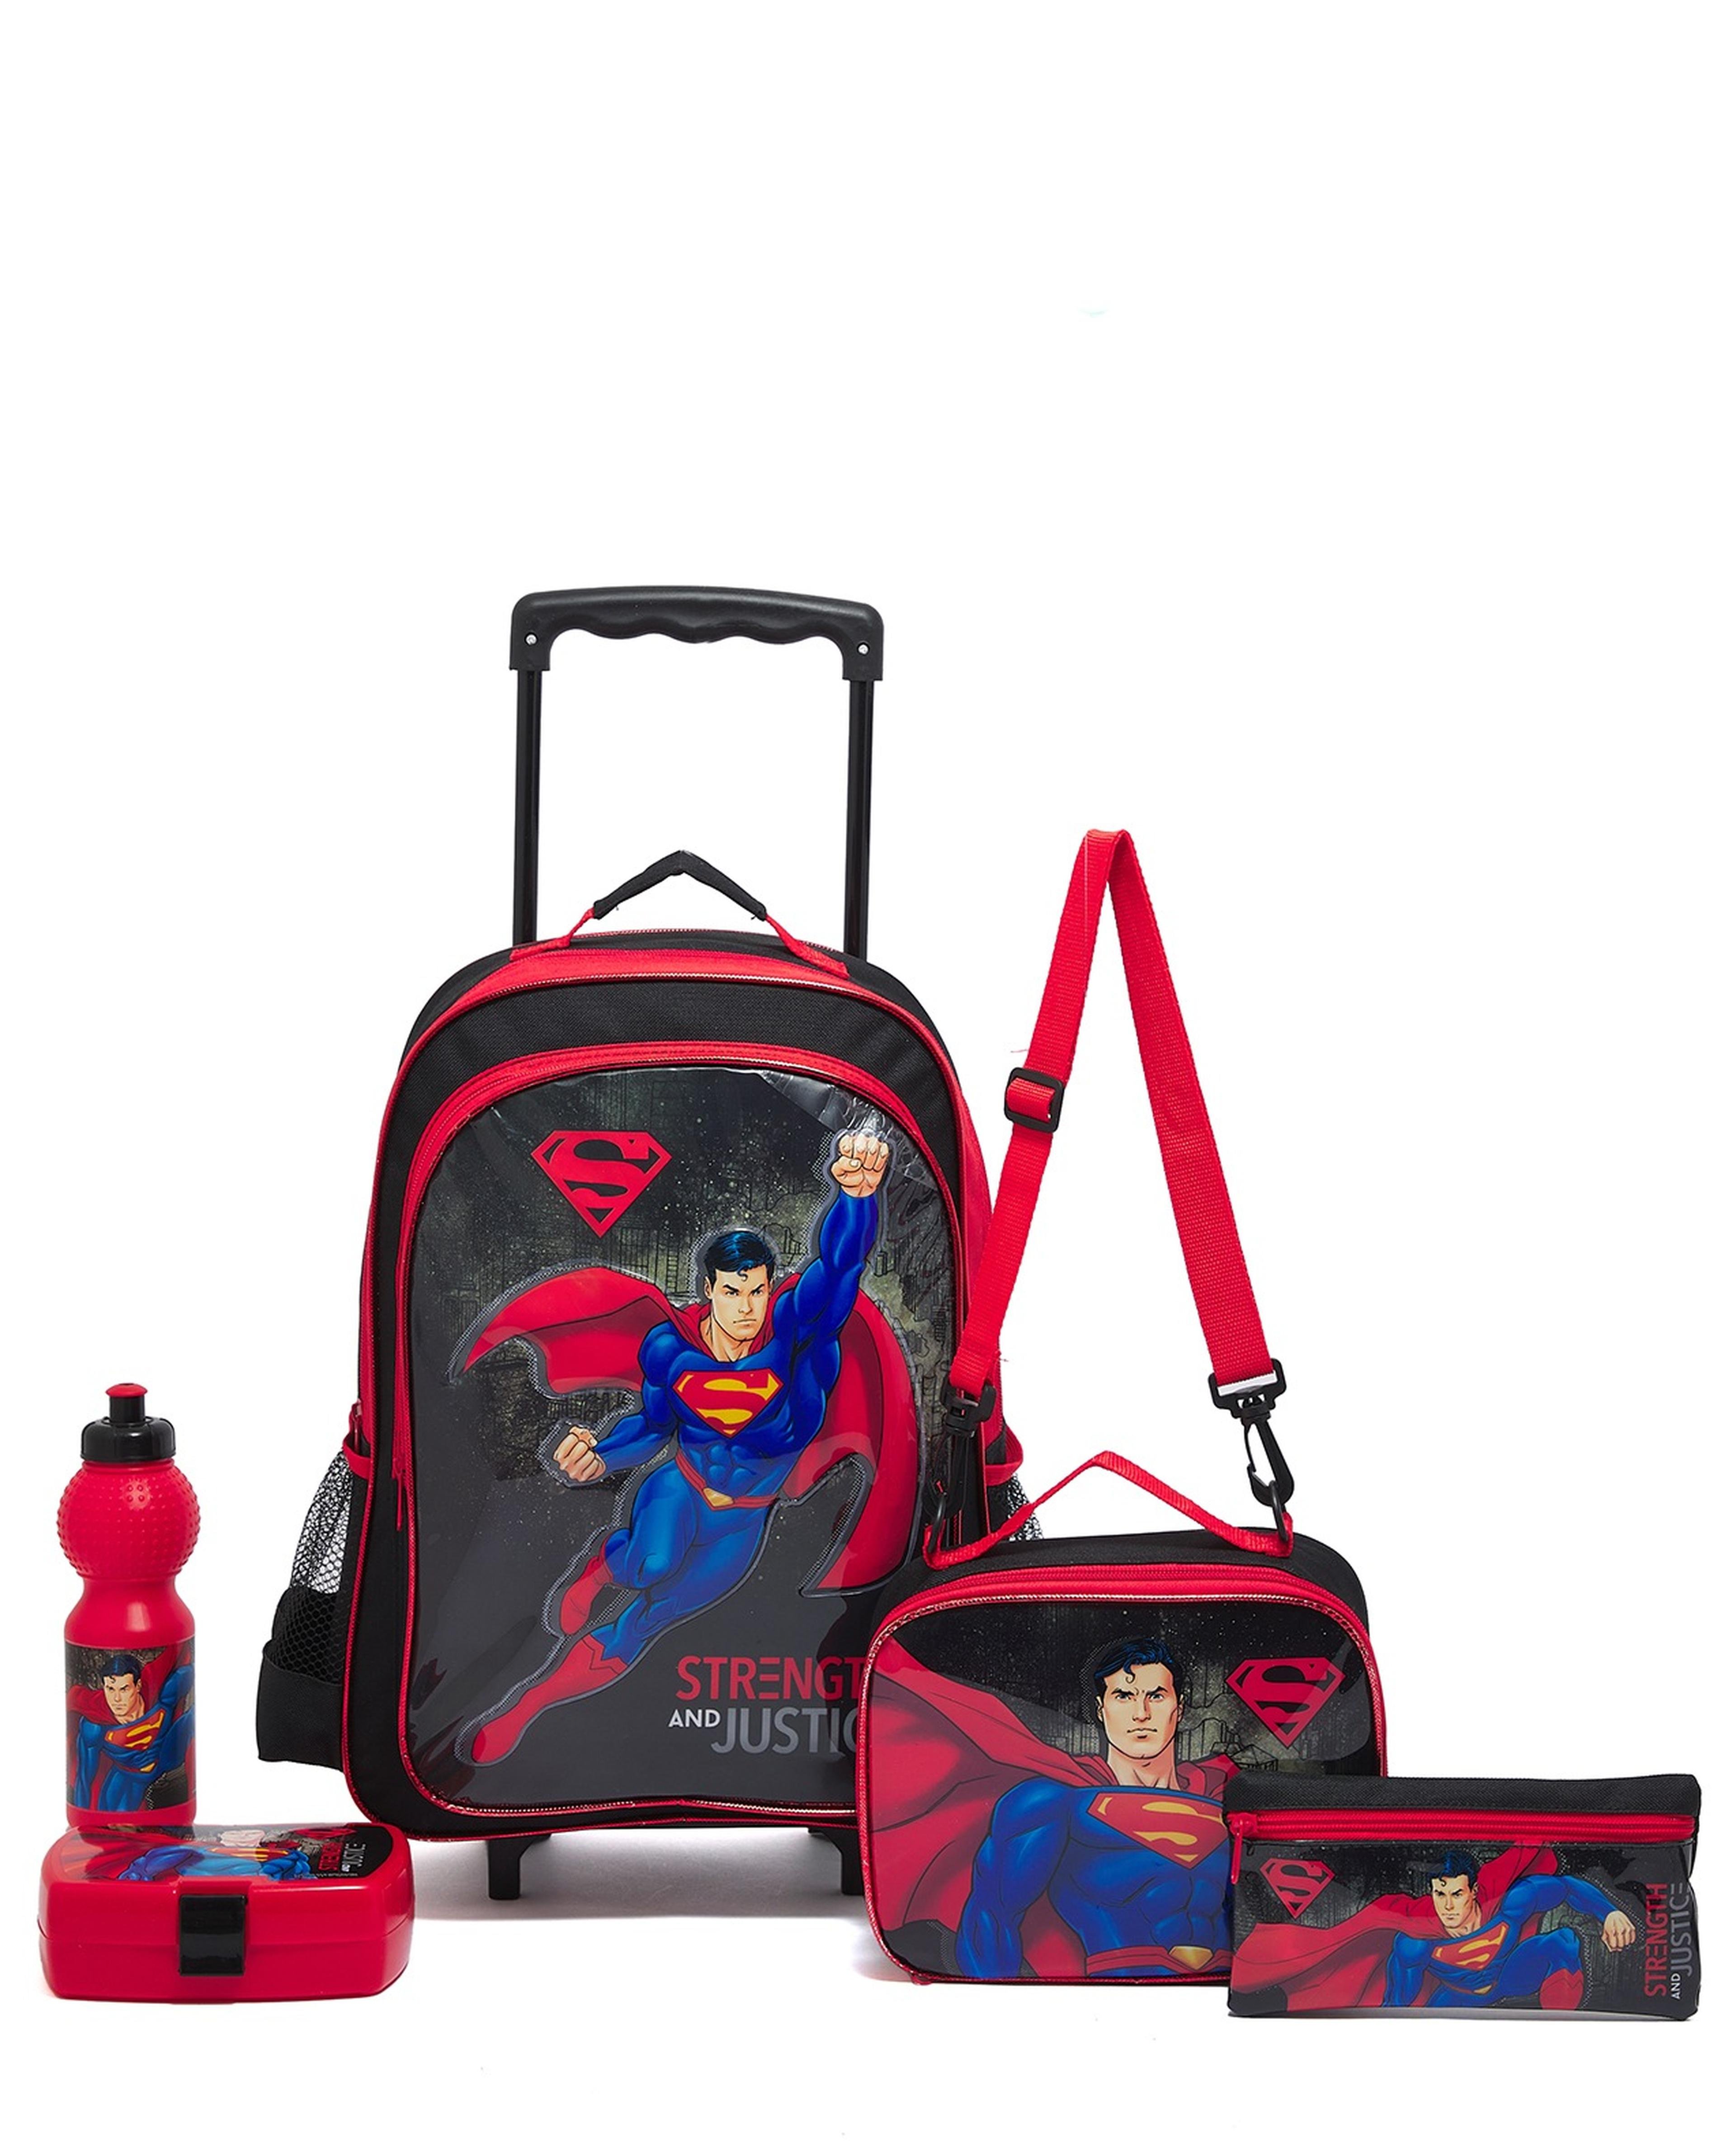 Superman Theme Value Pack